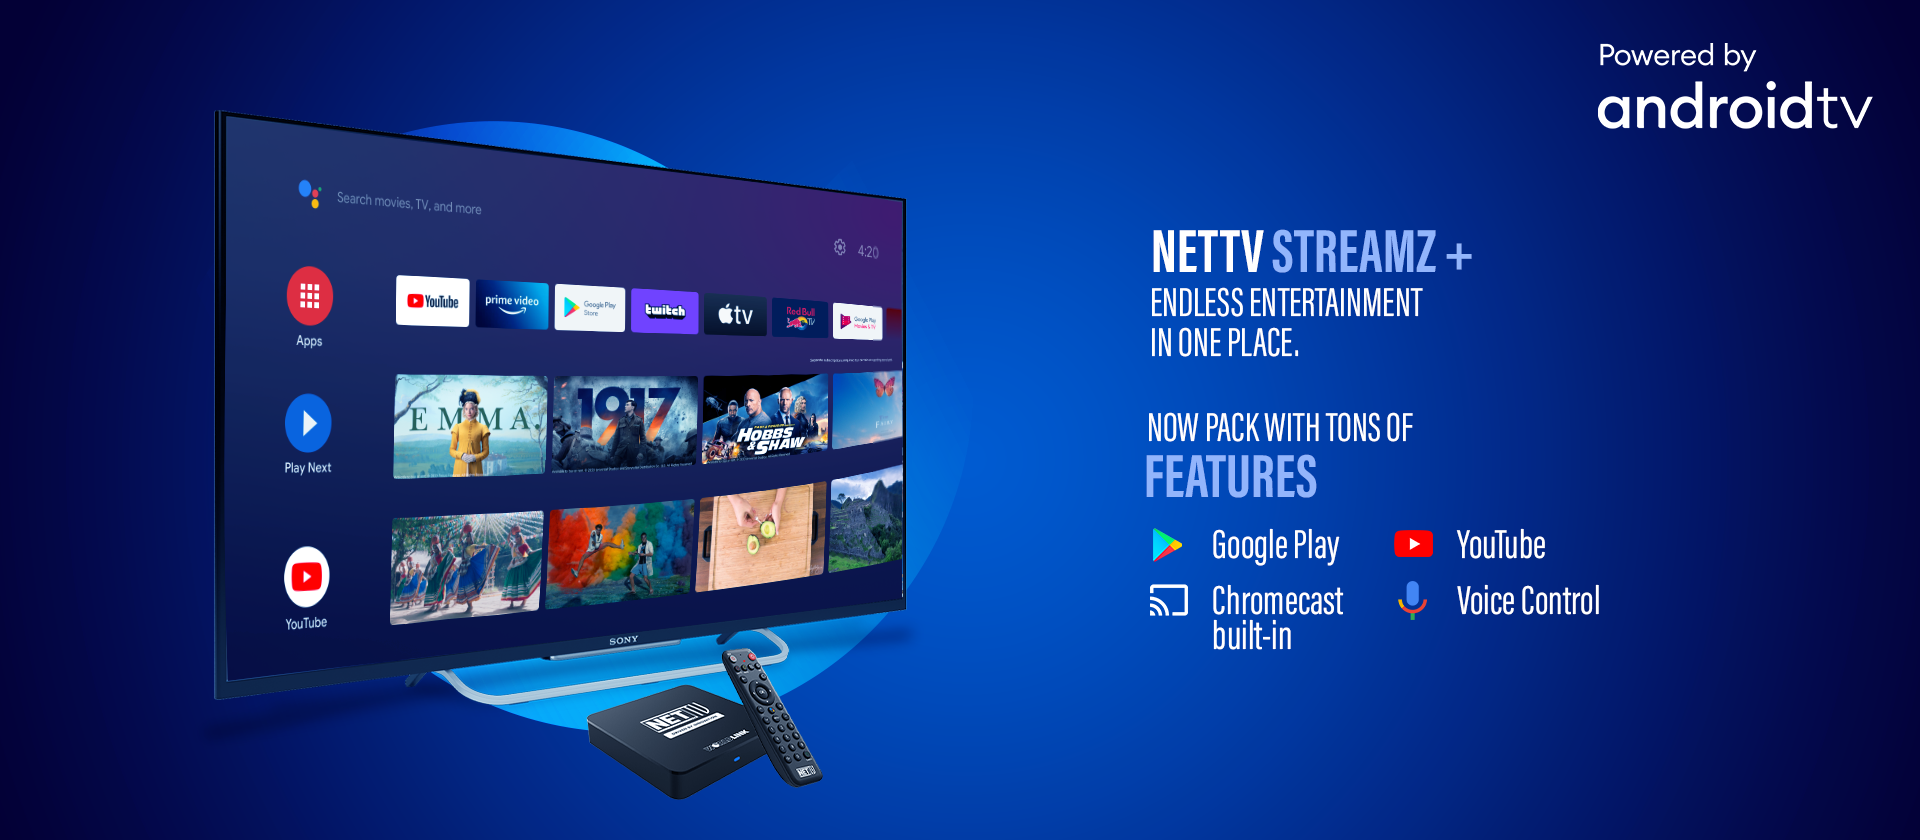 NetTV Streamz+